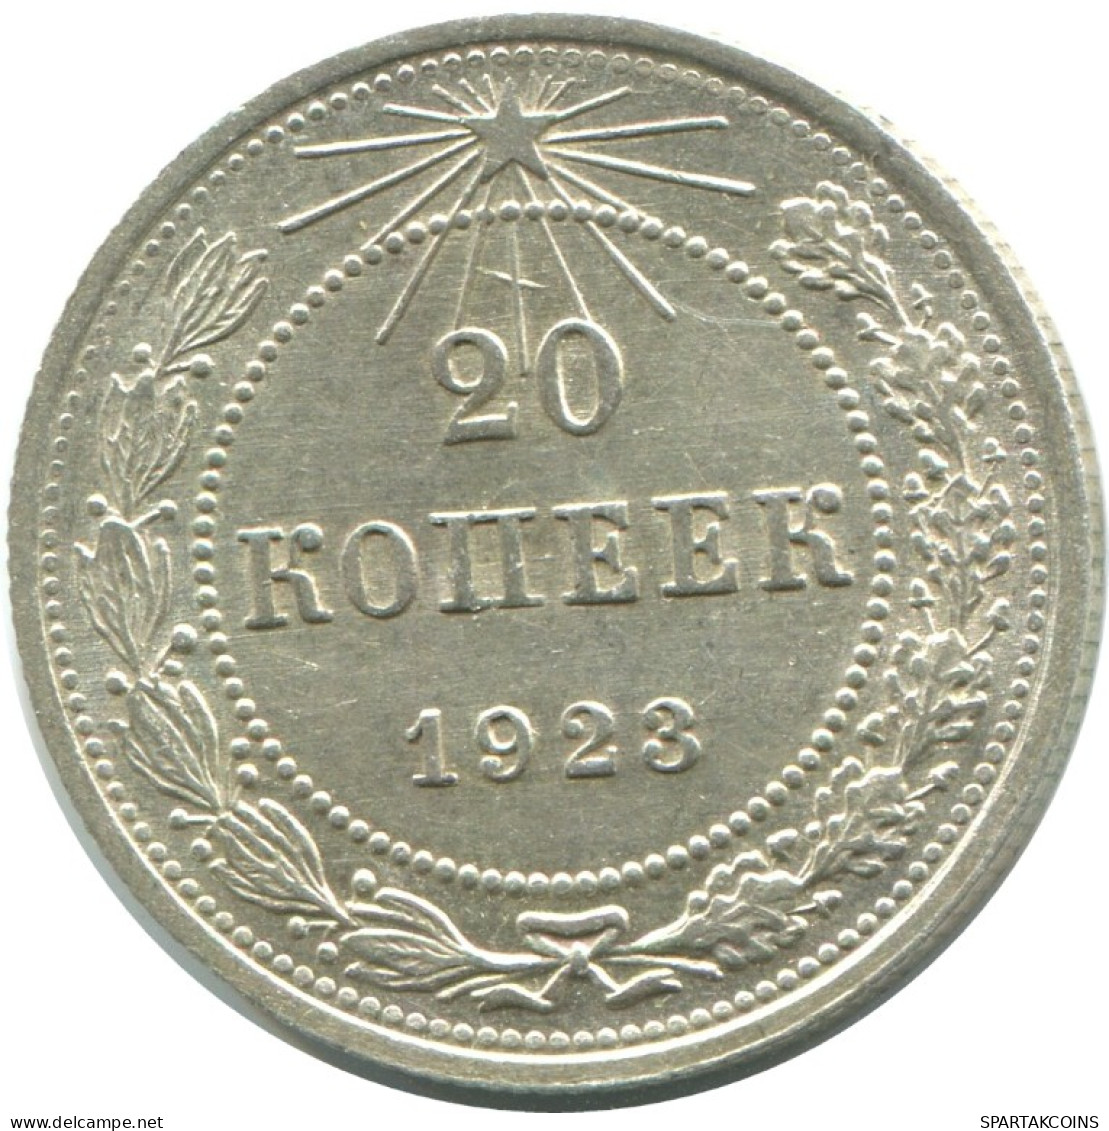 20 KOPEKS 1923 RUSSLAND RUSSIA RSFSR SILBER Münze HIGH GRADE #AF535.4.D.A - Russie